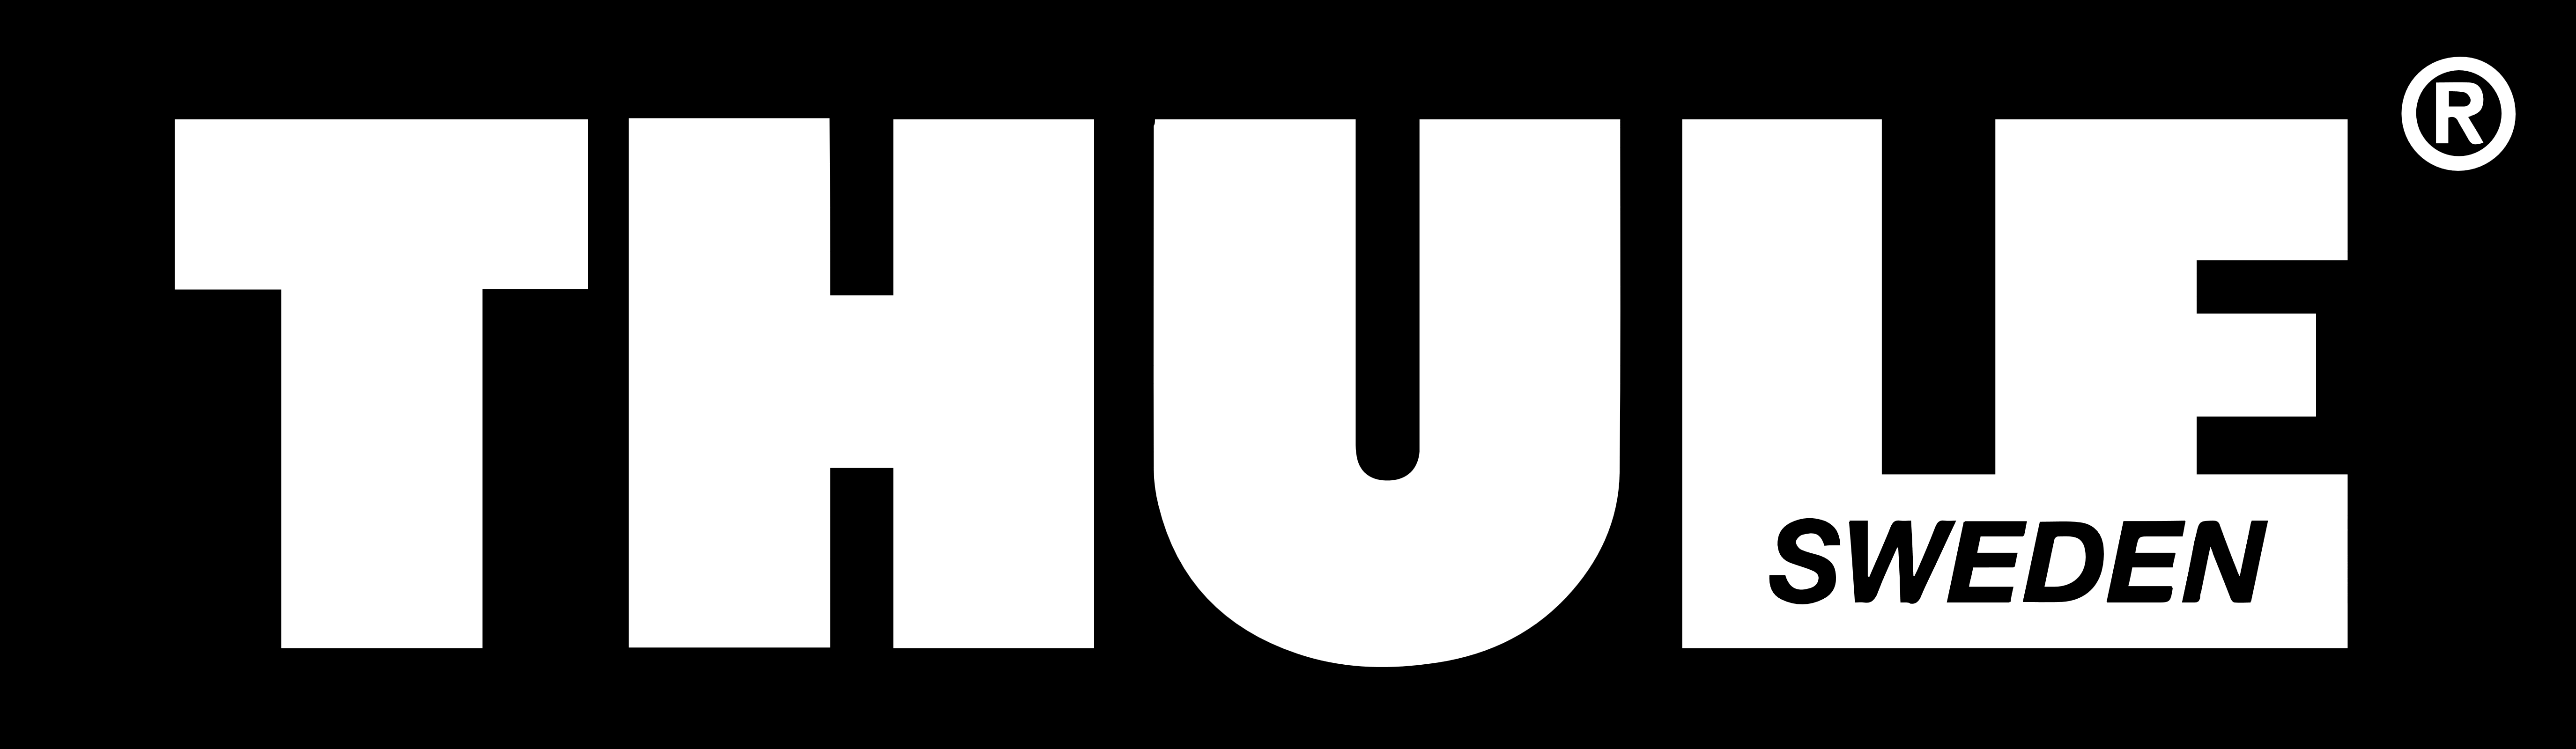 Valmistajan logo